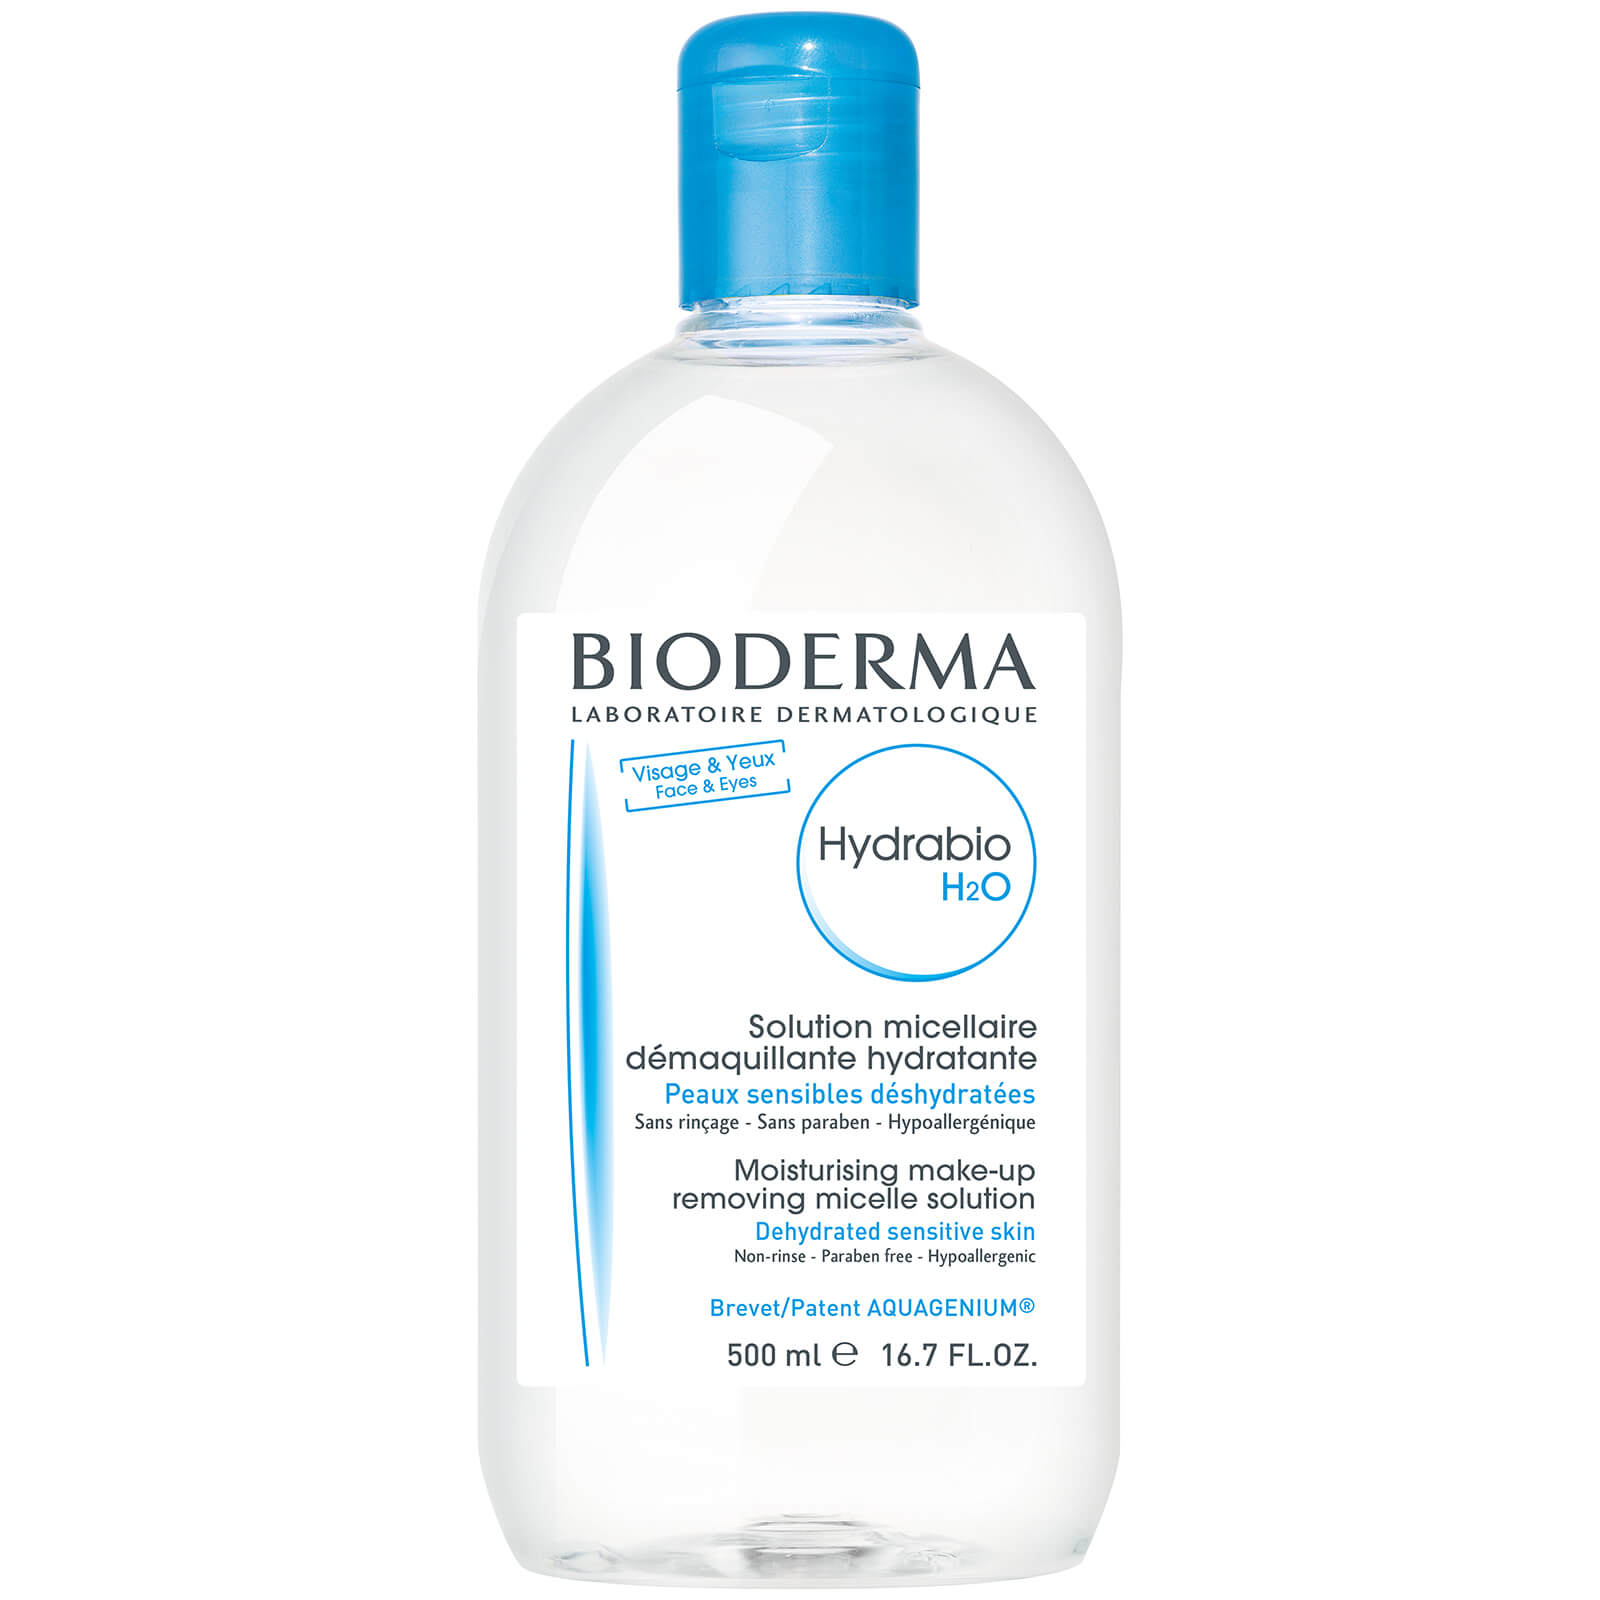 Gel de Limpeza Hydrabio H2O da Bioderma 500 ml